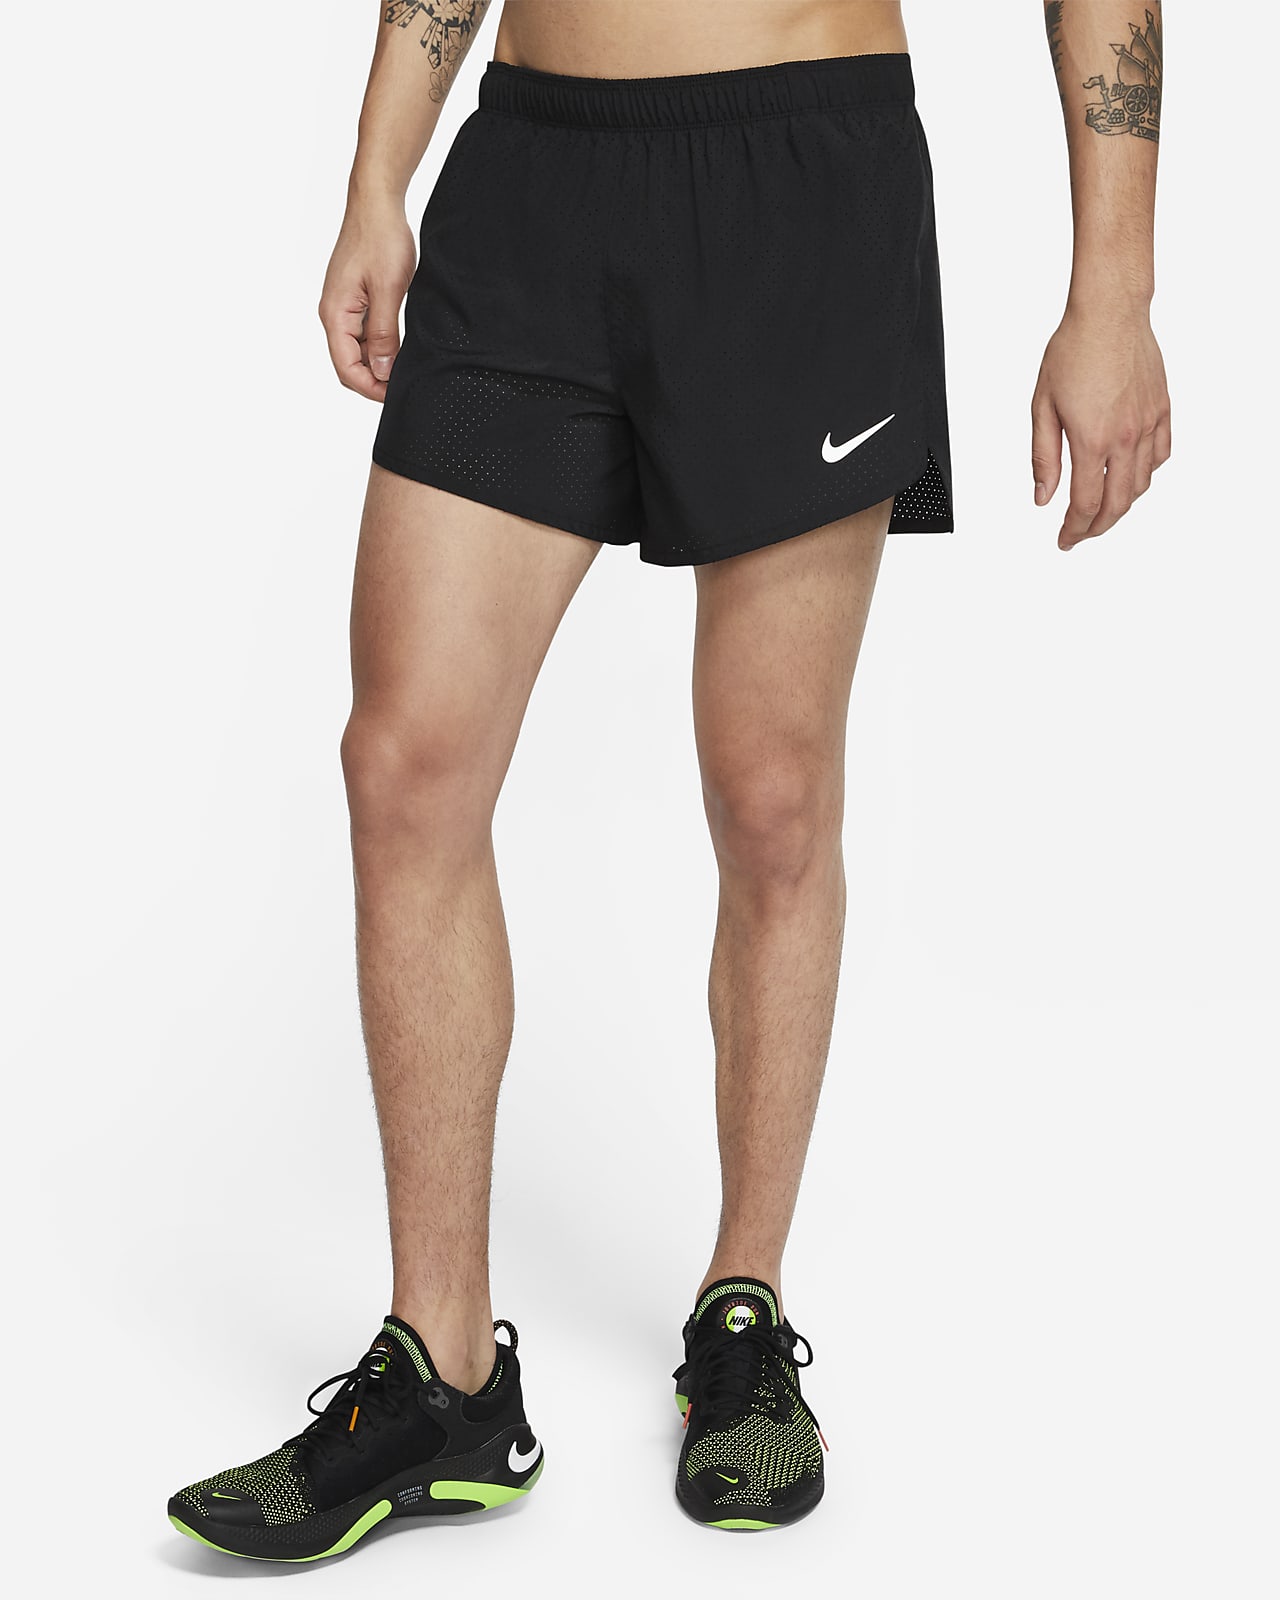 mens workout shorts nike